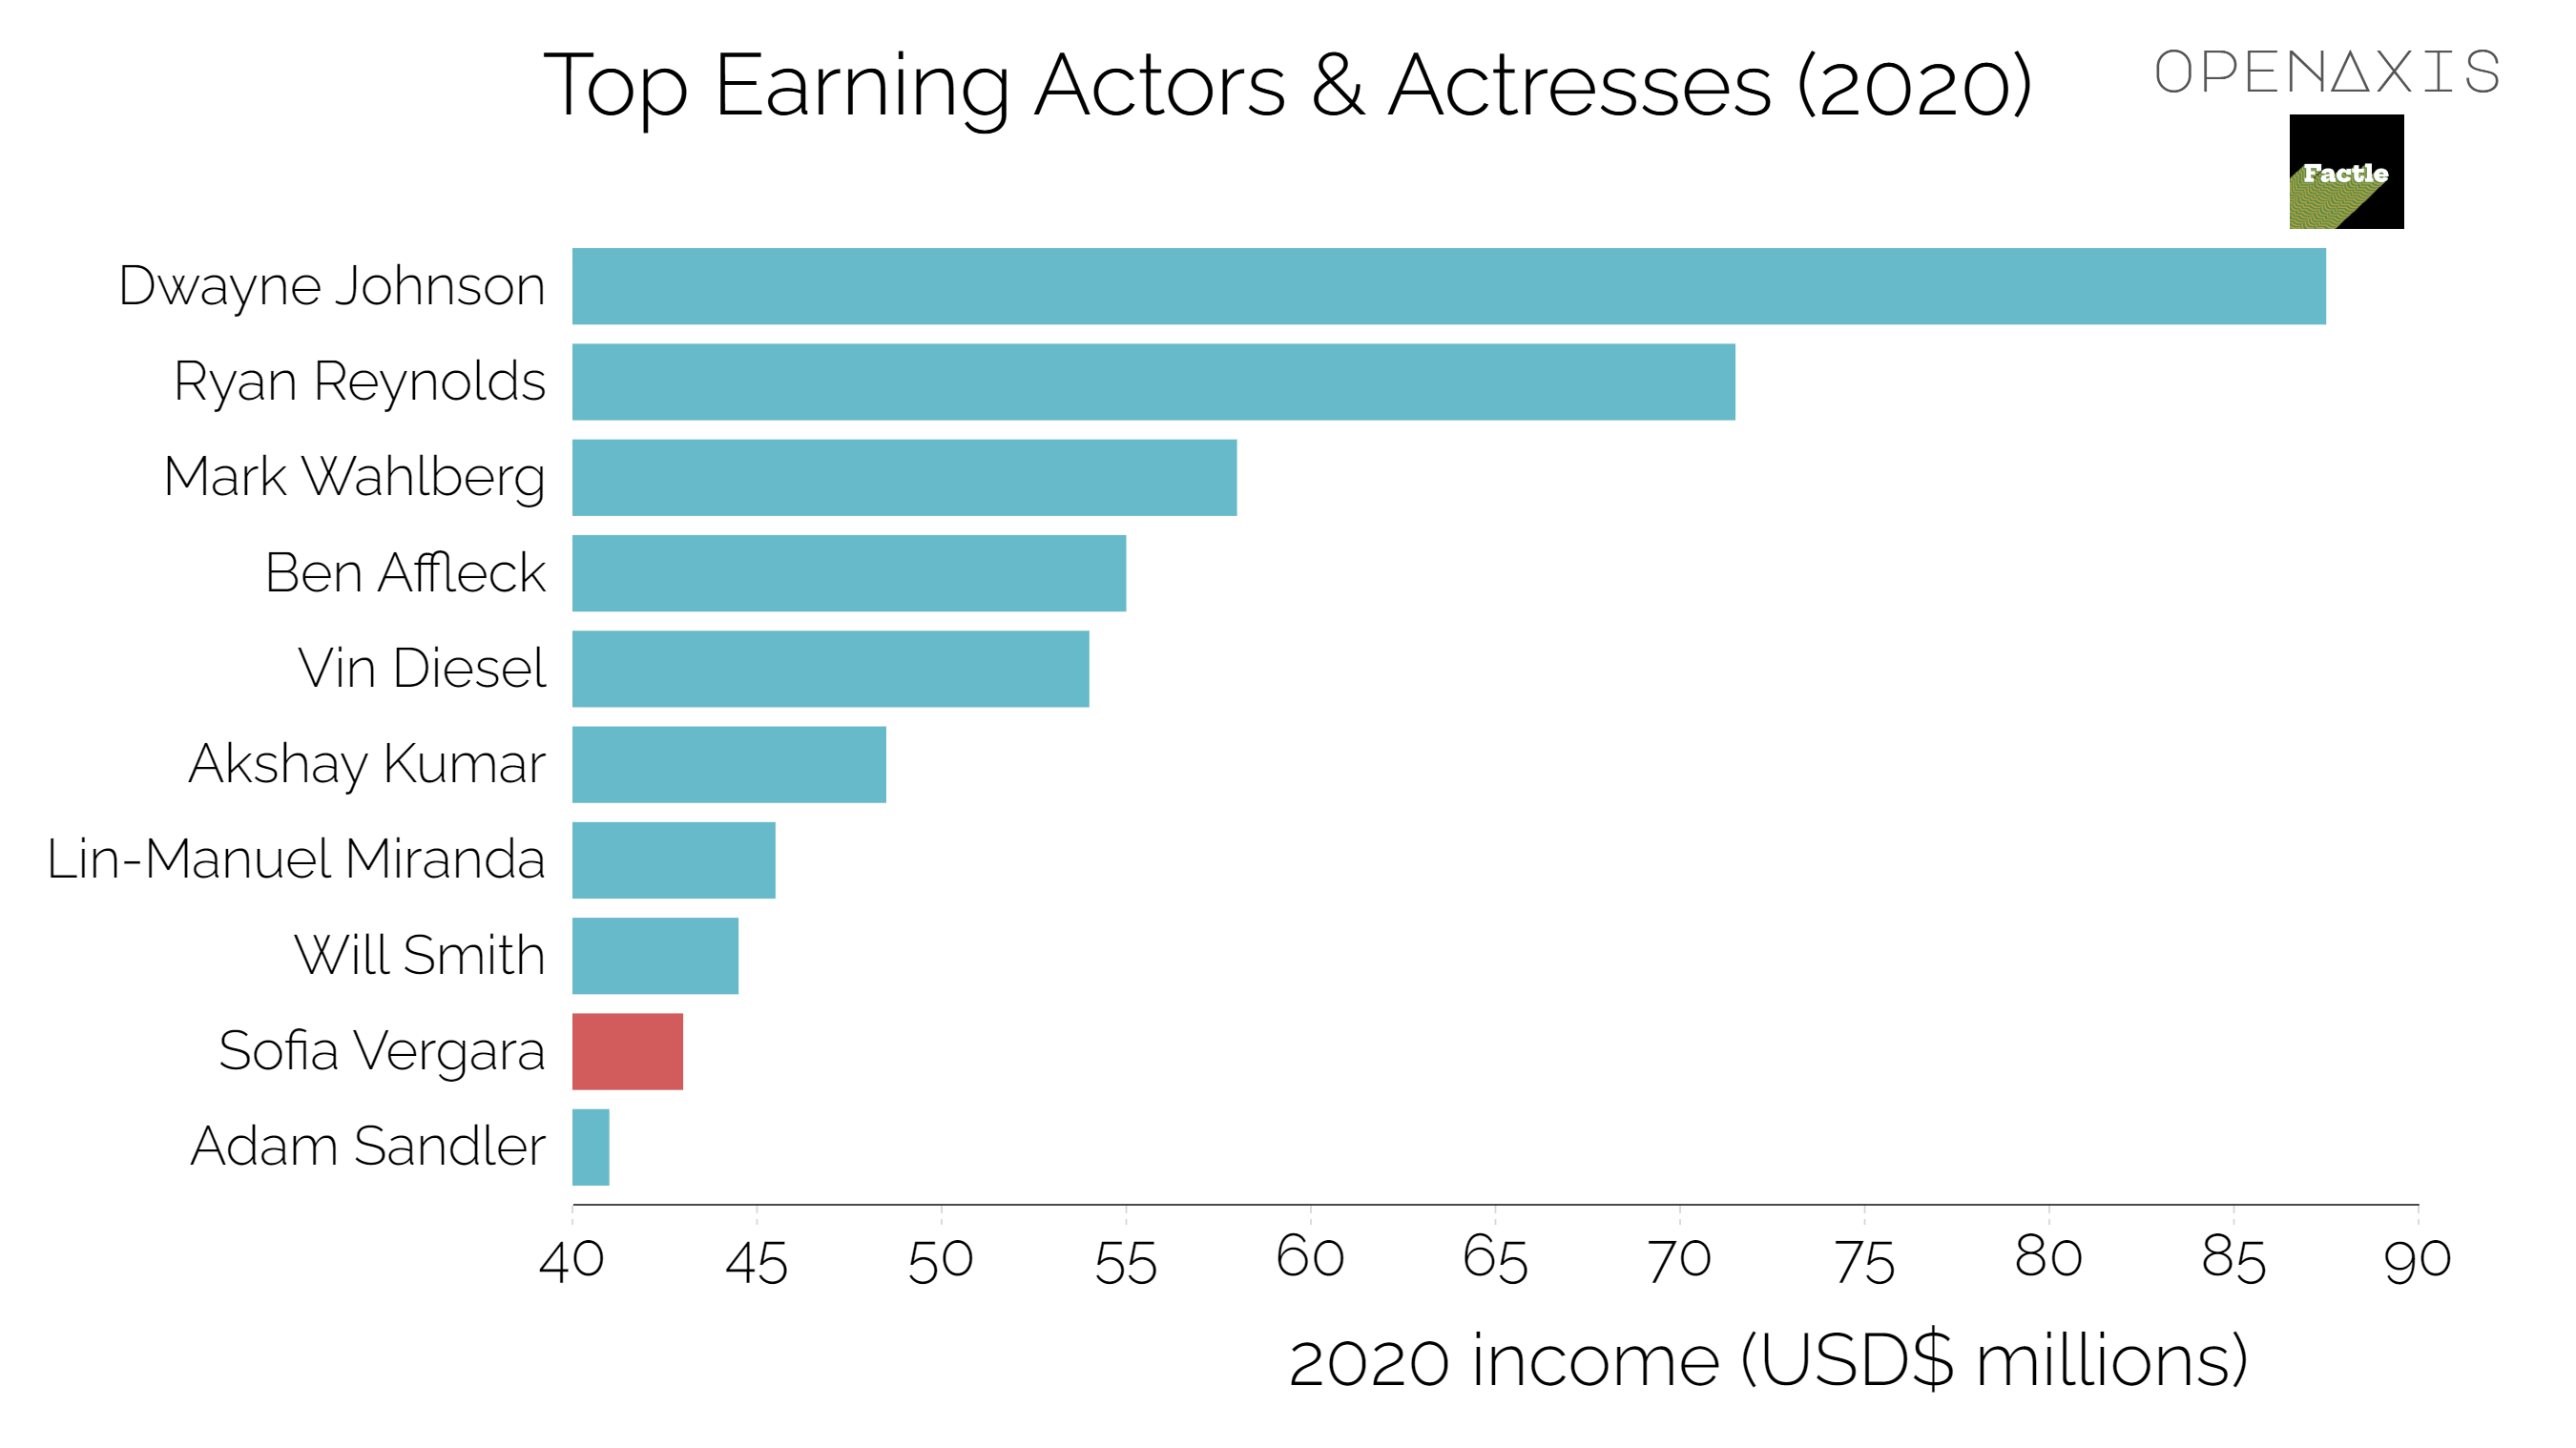 "Top Earning Actors & Actresses (2020)"